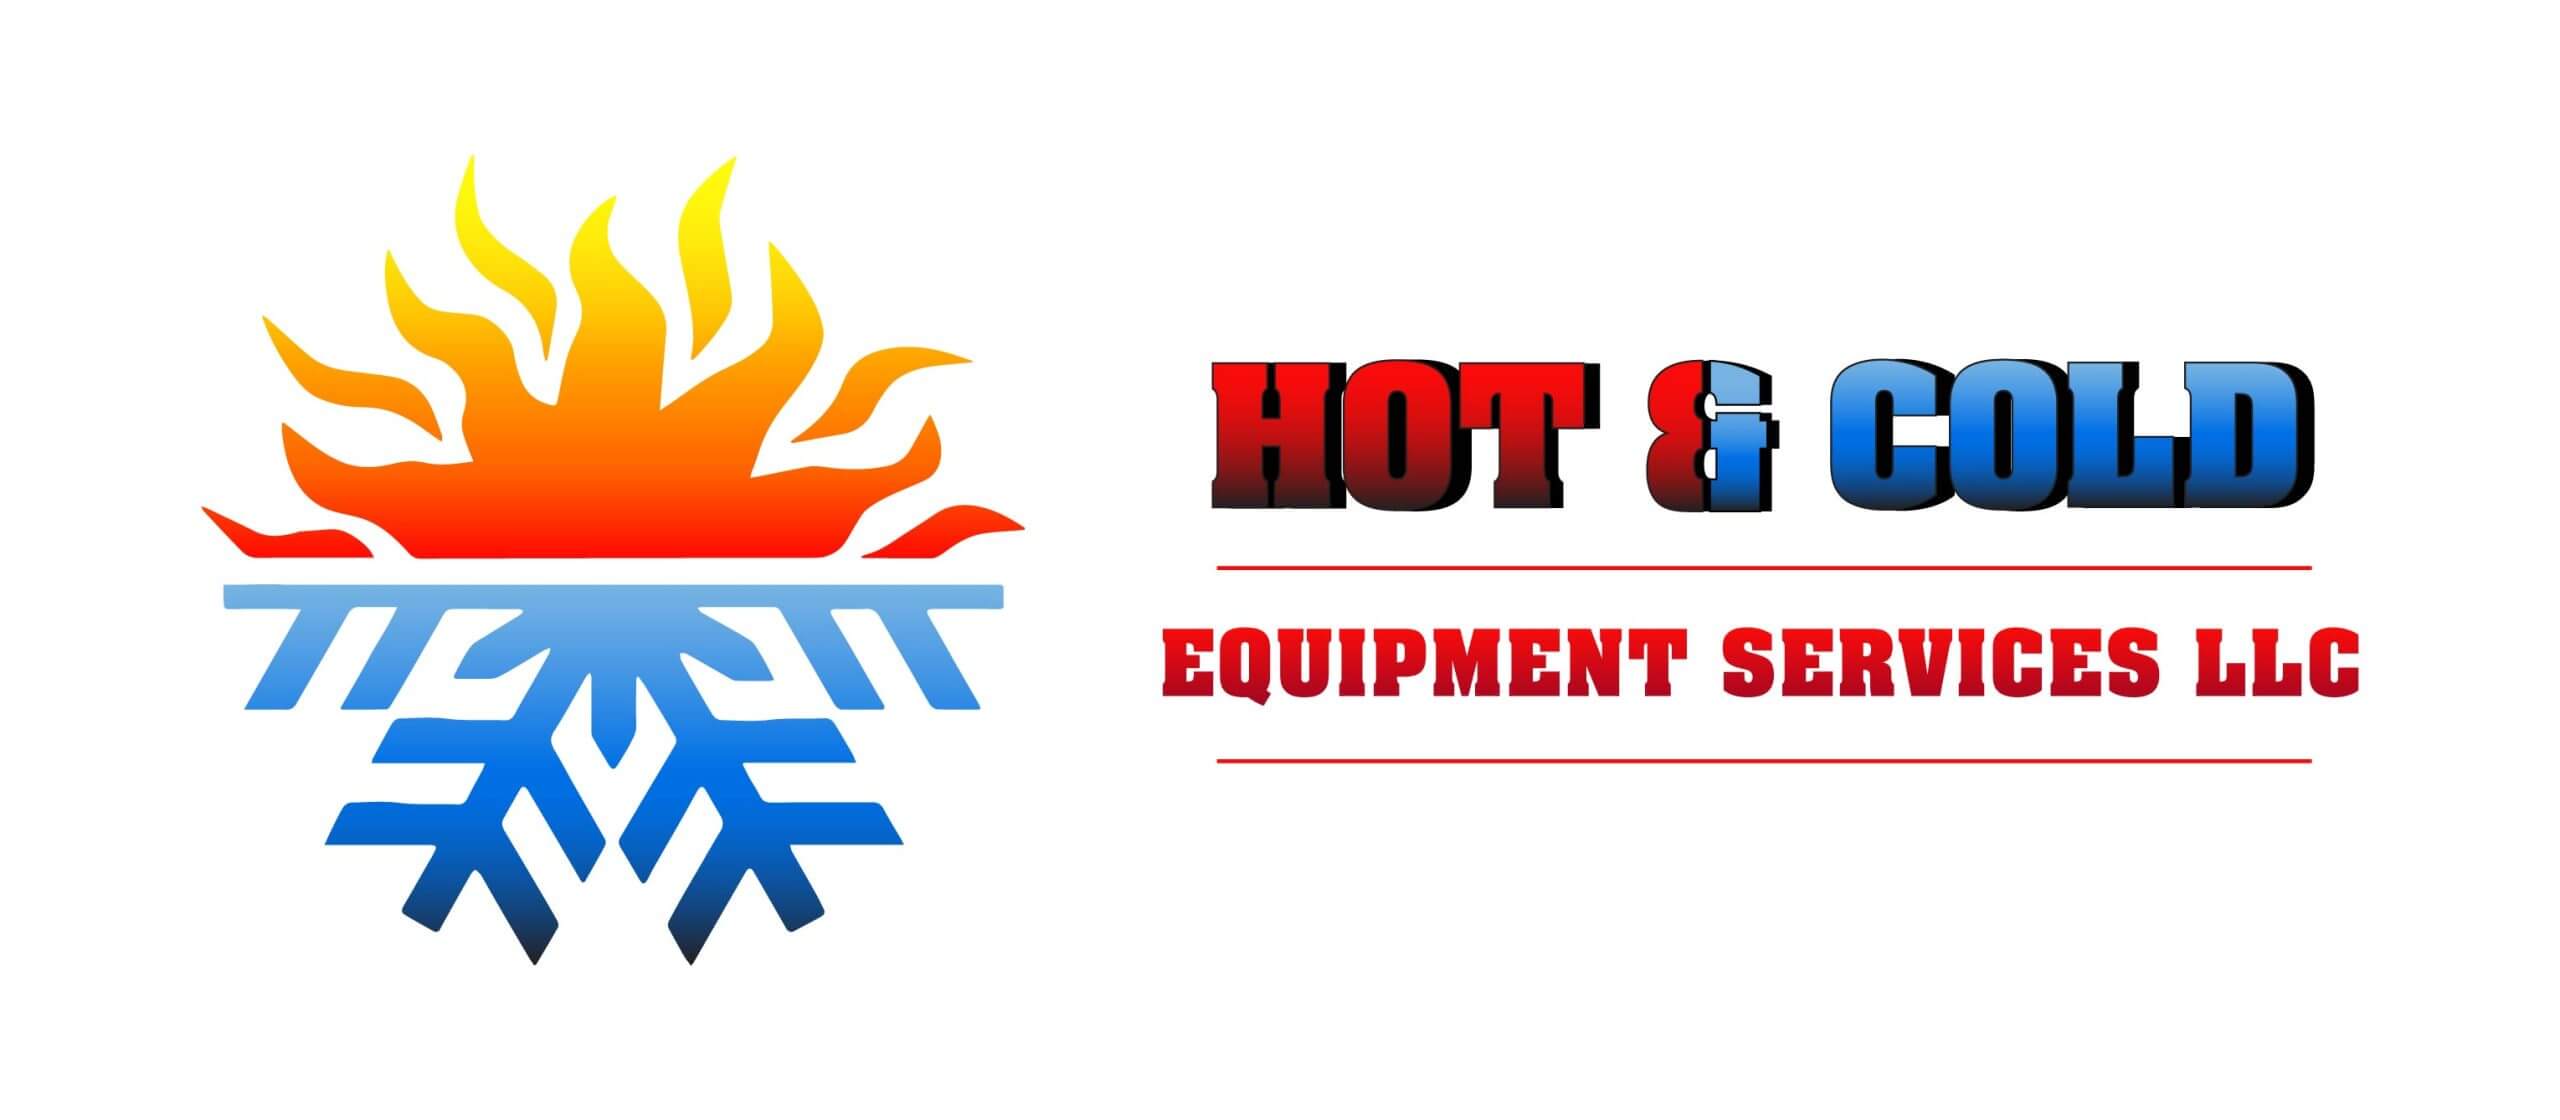 Hot & Cold Equipment Services, LLC